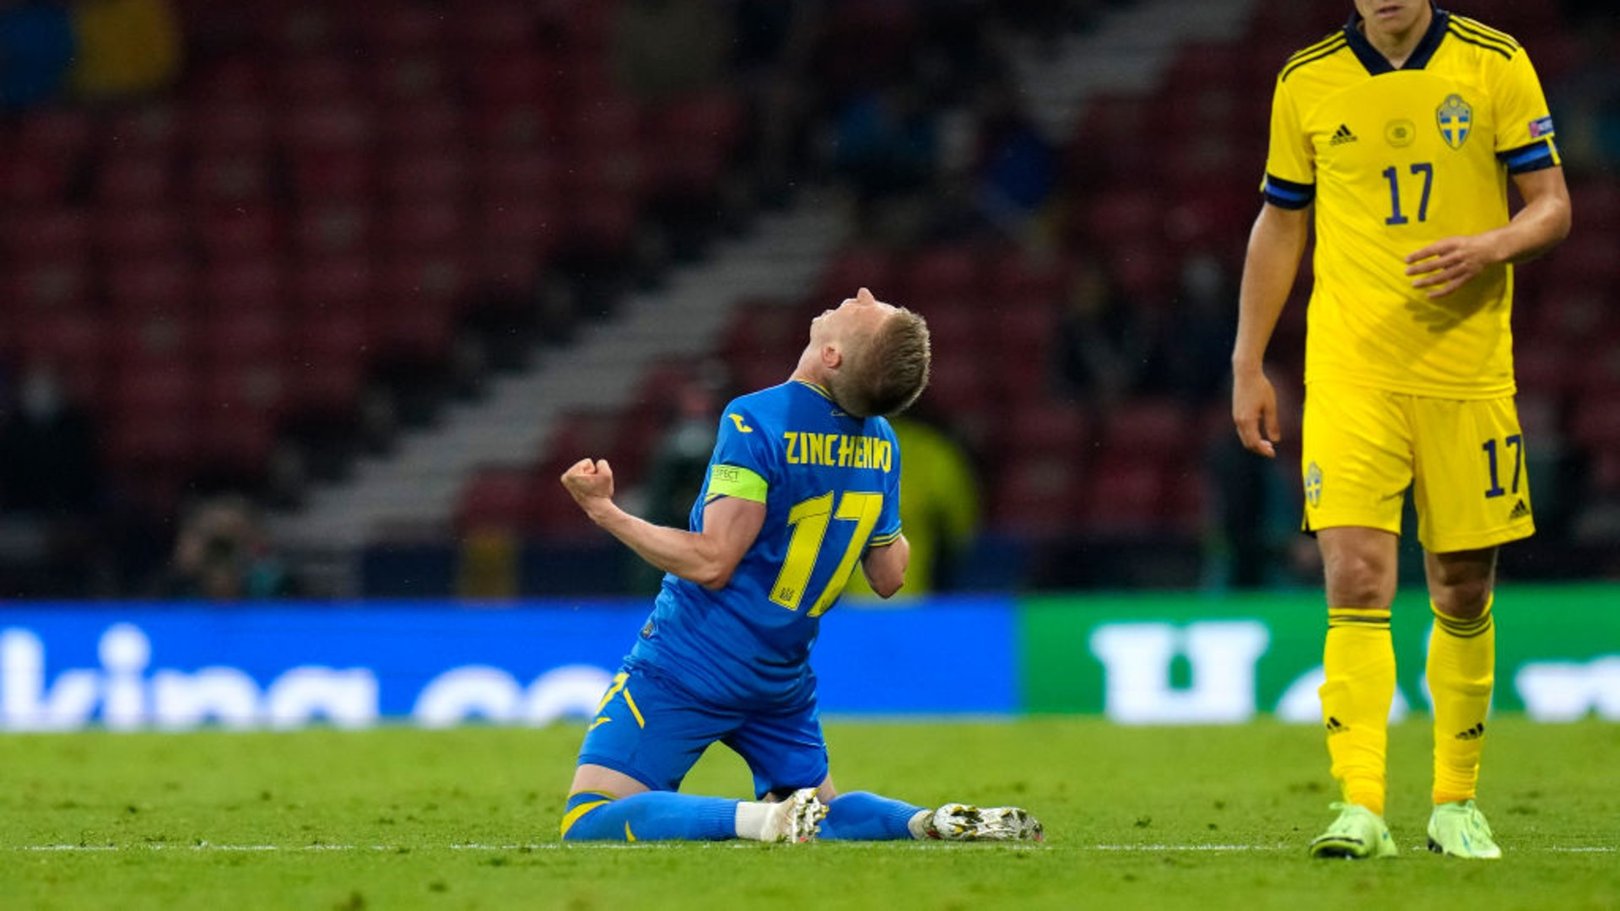 Zinchenko on target as Ukraine make history at Euro 2020